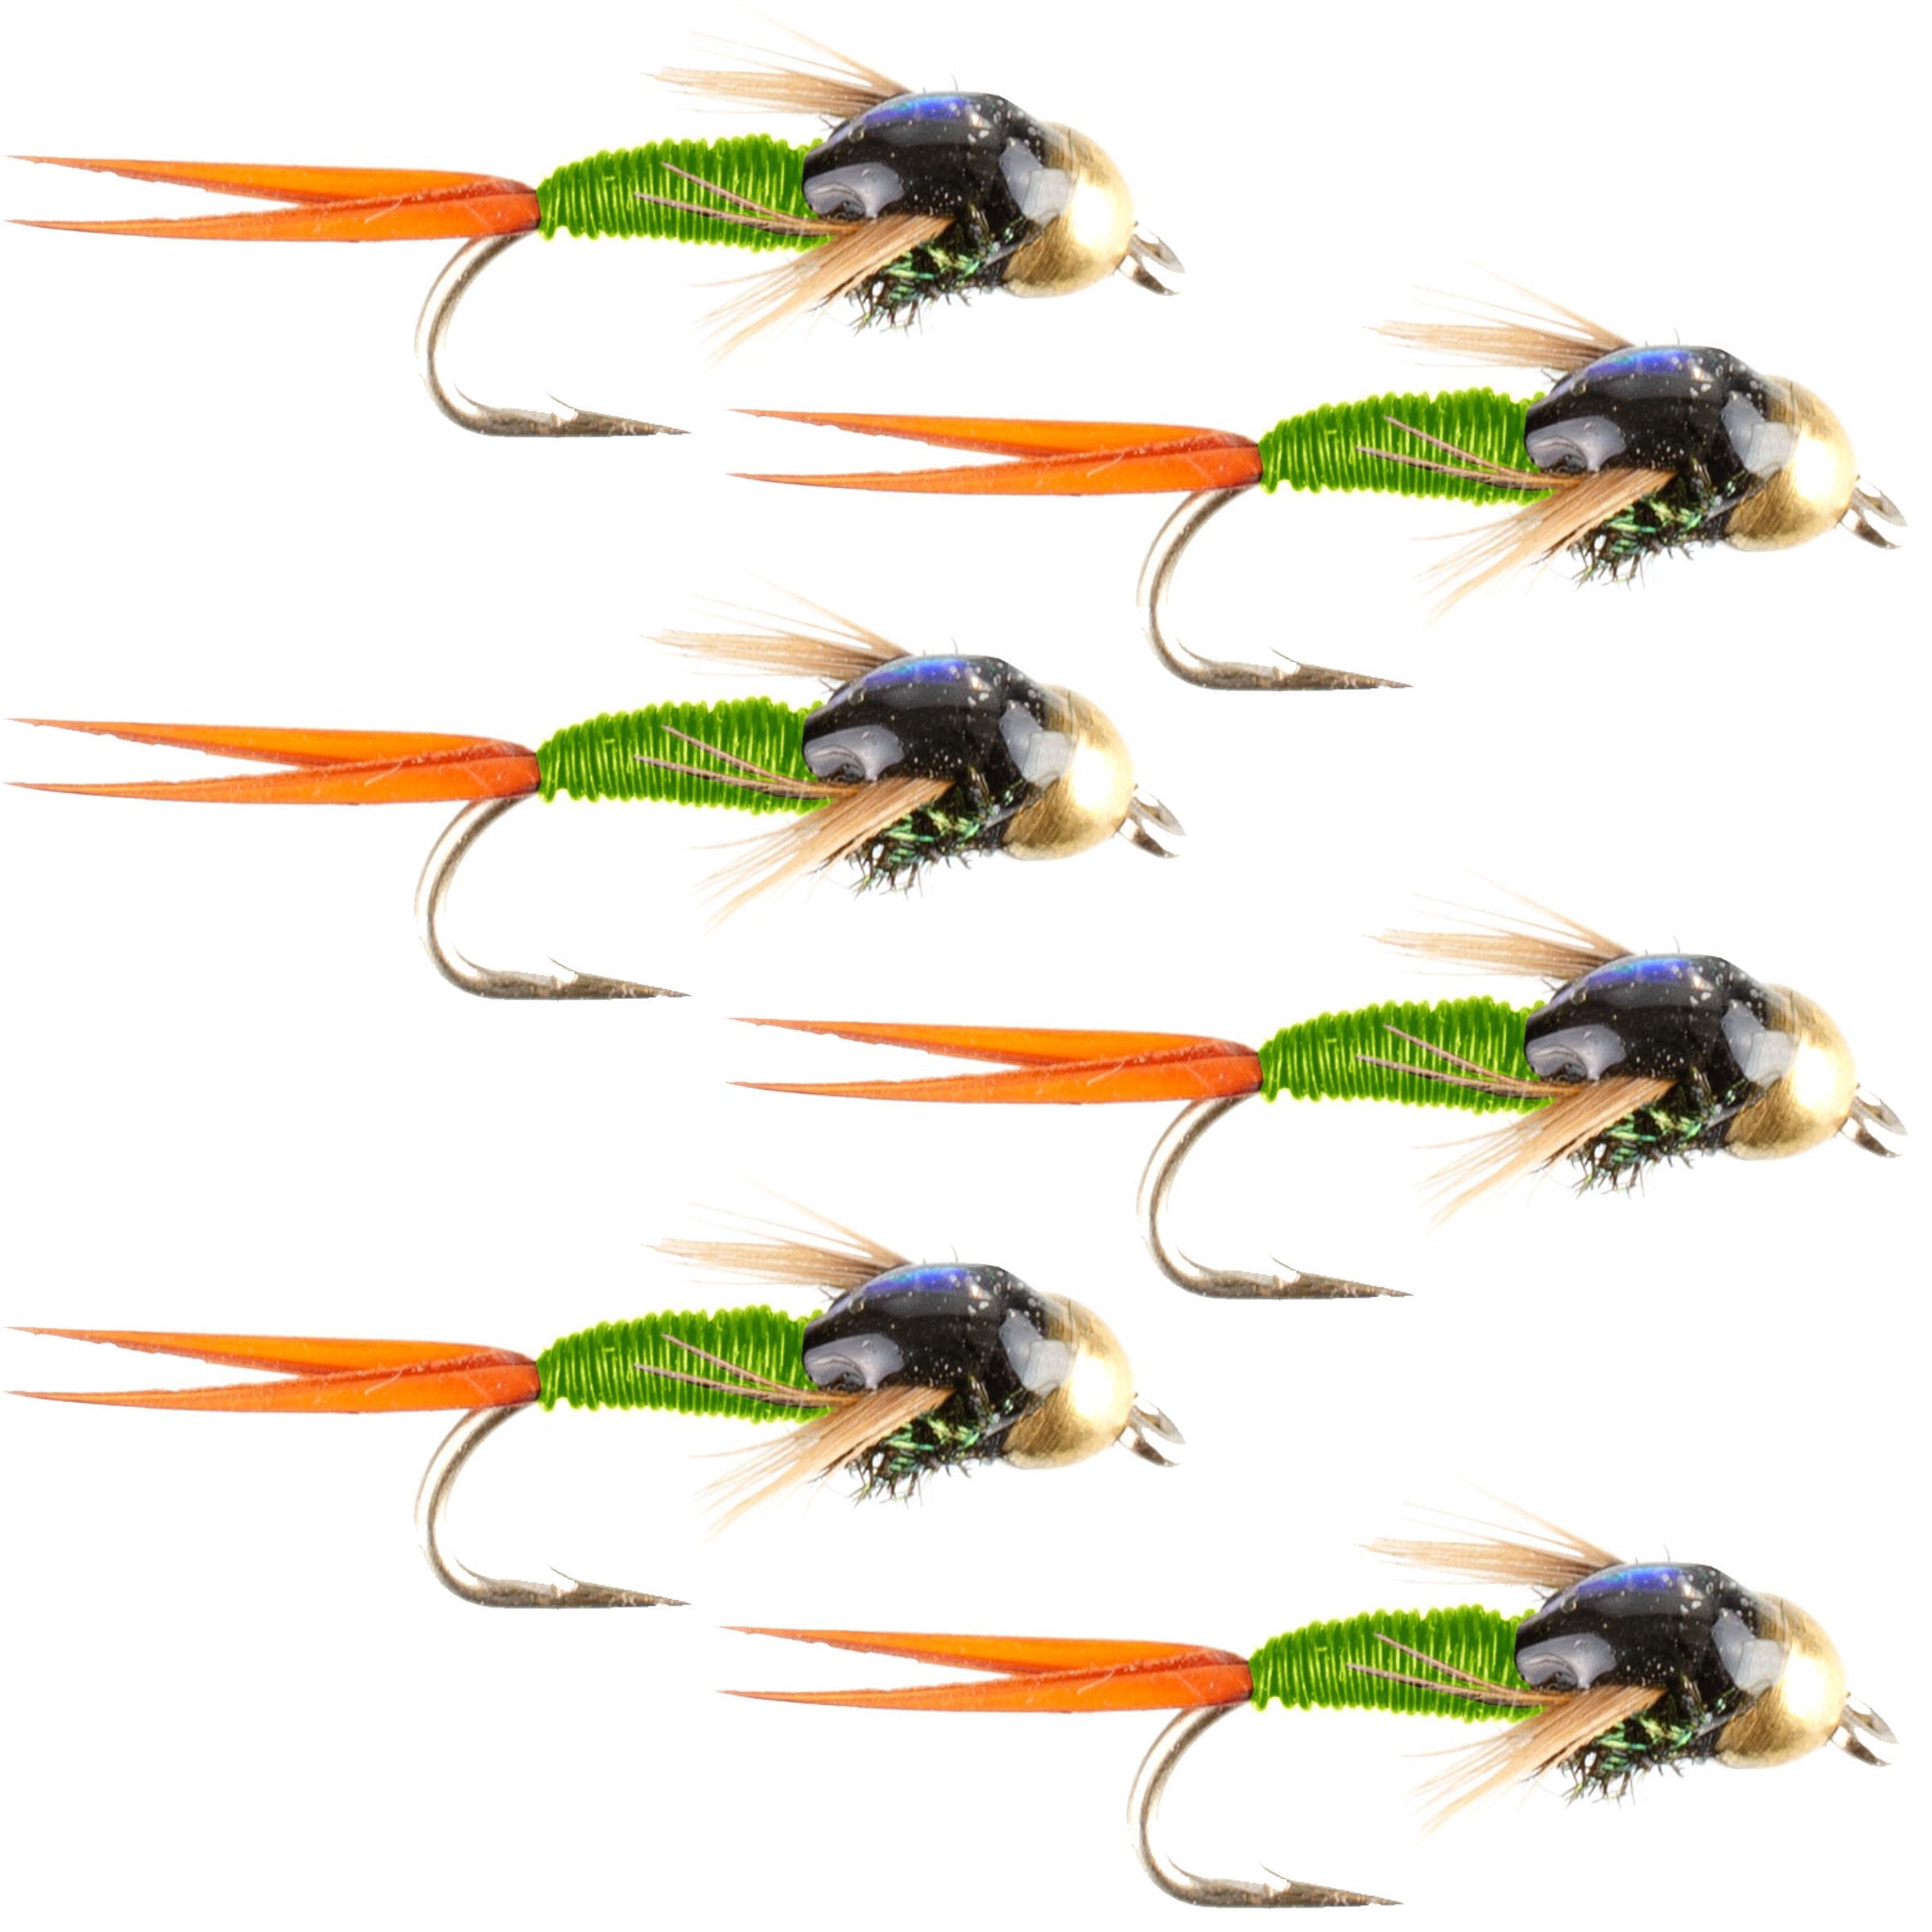 Bead Head Chartreuse Copper John Nymph Fly Fishing Flies - Set of 6 Flies Hook Size 18